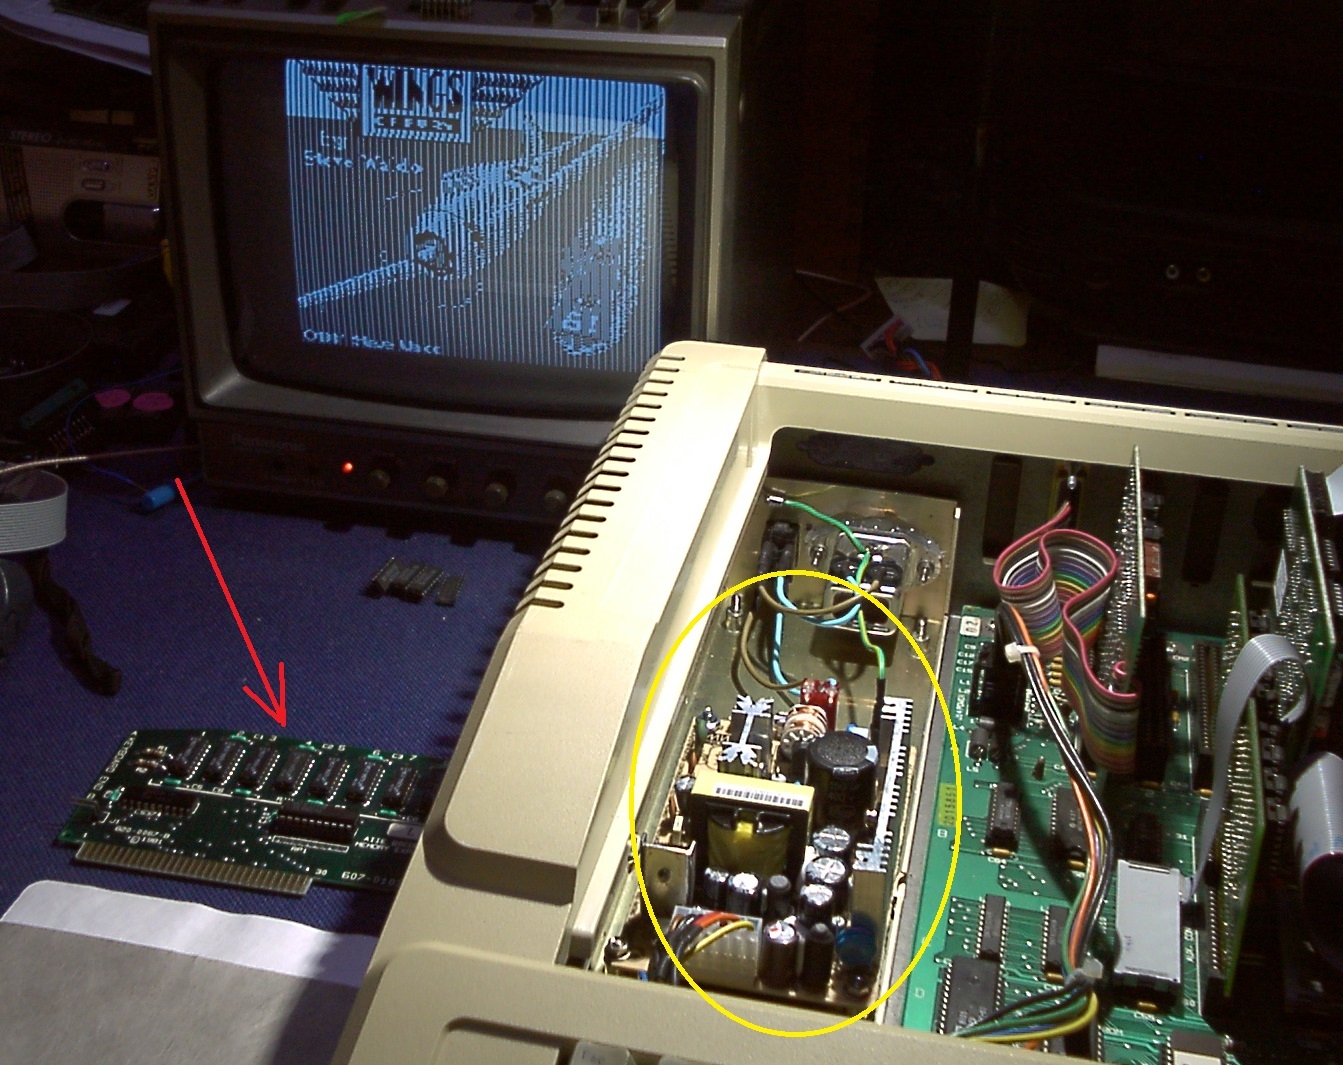 PT-65B replacing the original Apple IIe power supply PCB.